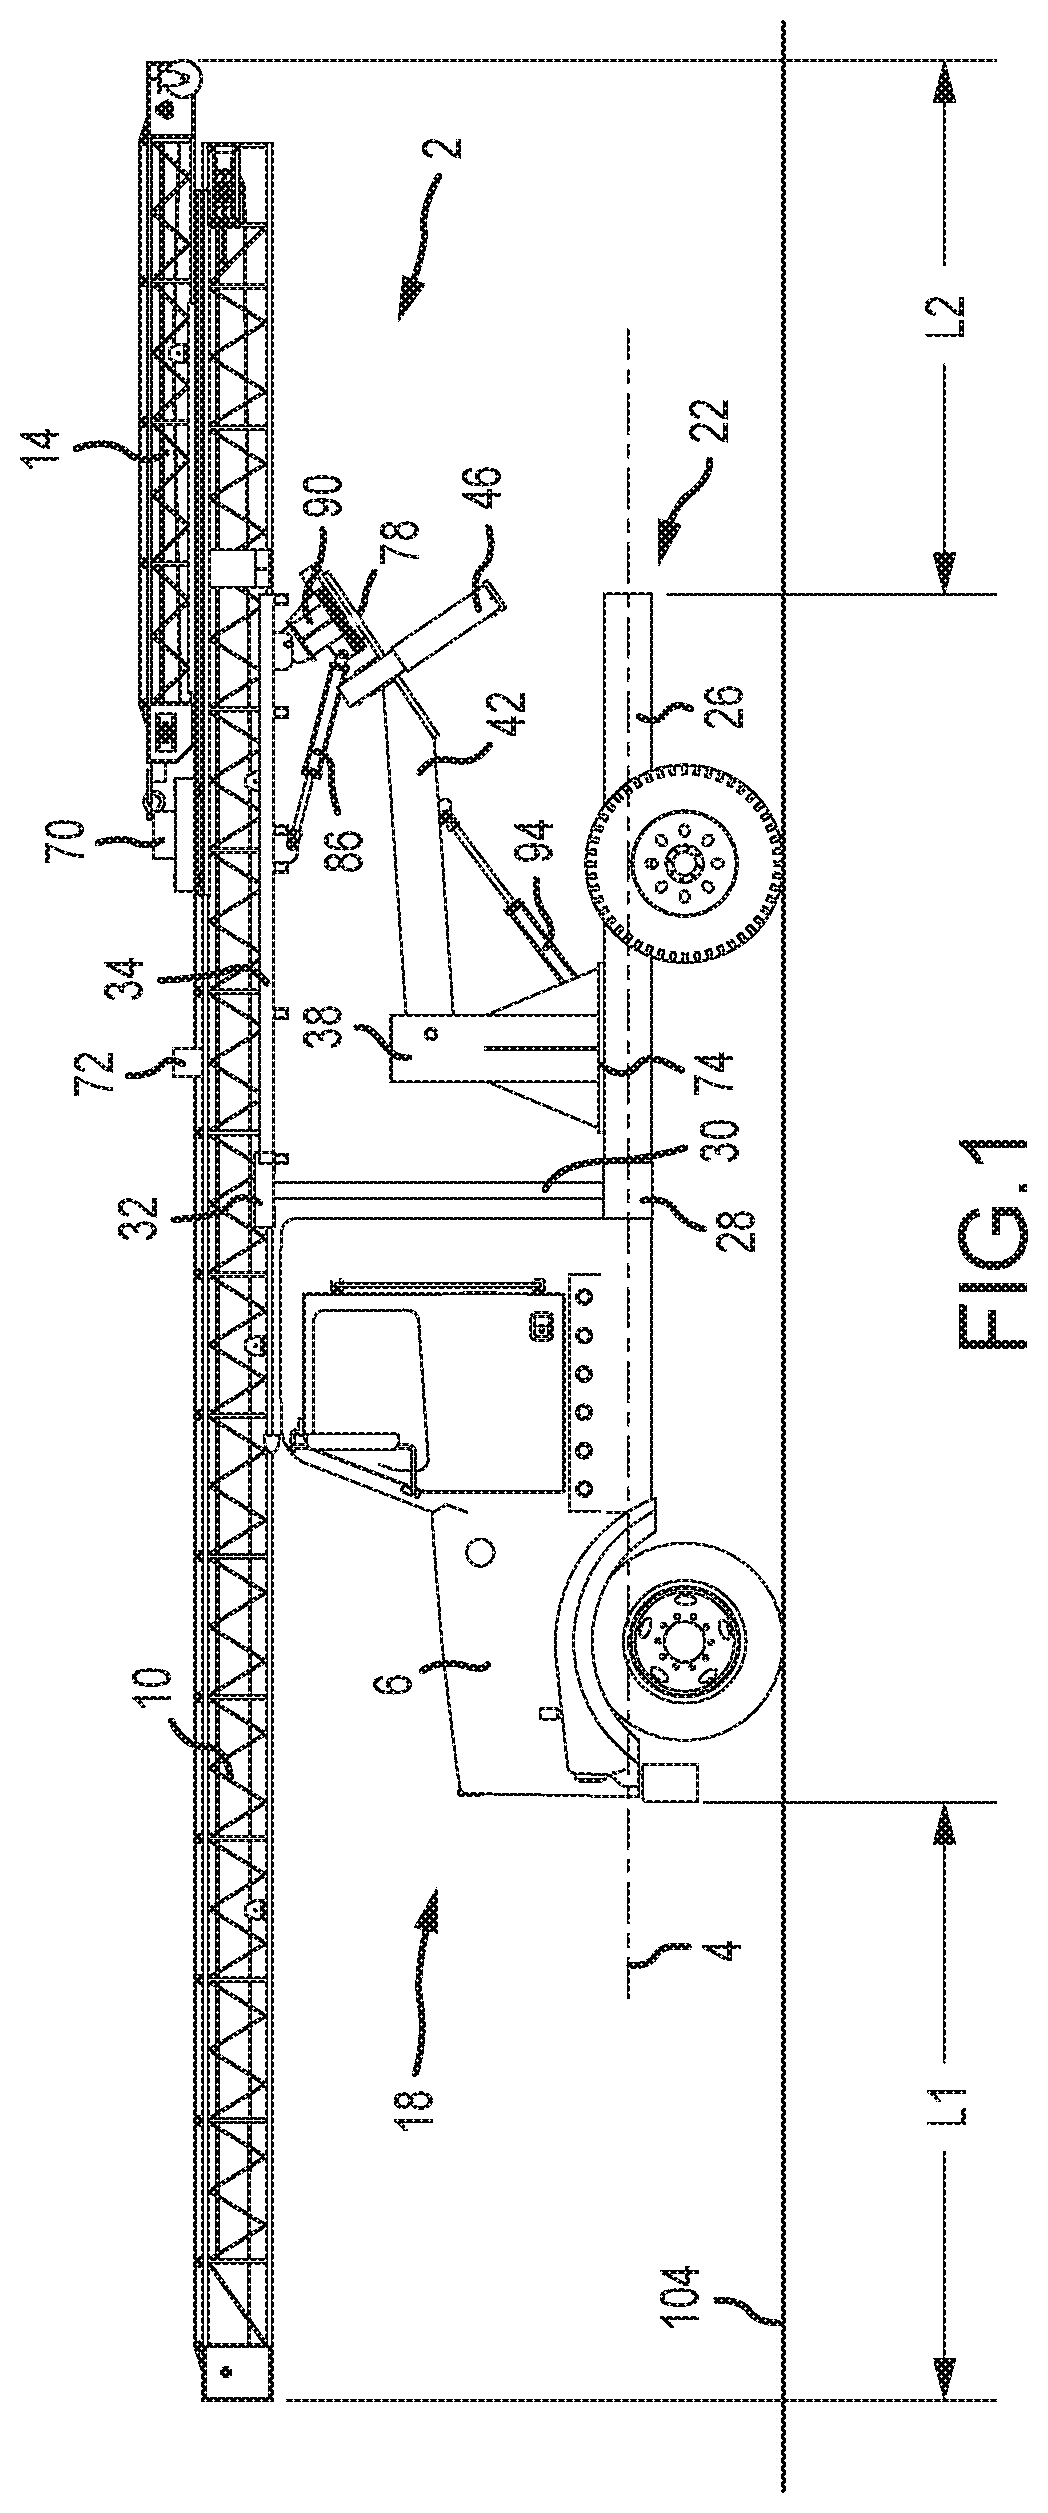 Vehicle-mounted conveyor system